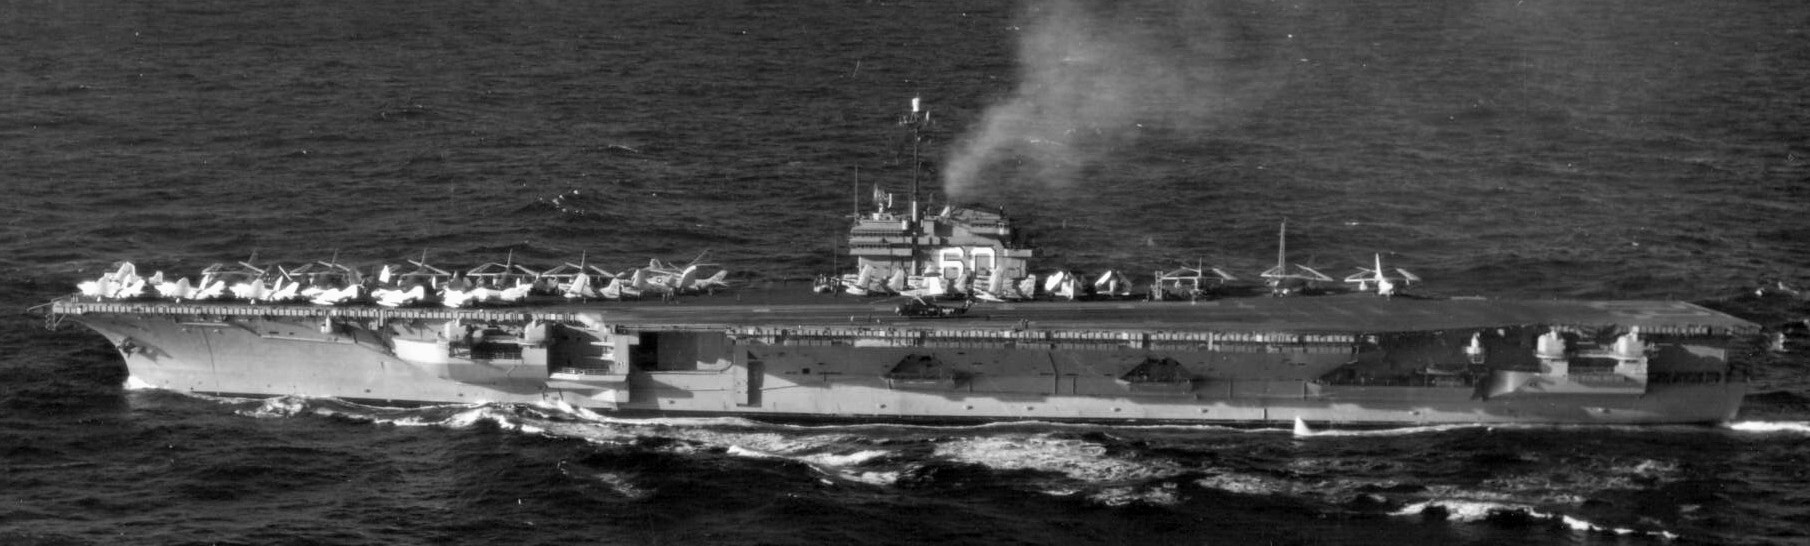 cv-60 uss saratoga forrestal class aircraft carrier air group cvg-7 exercise strike back nato 1957 19